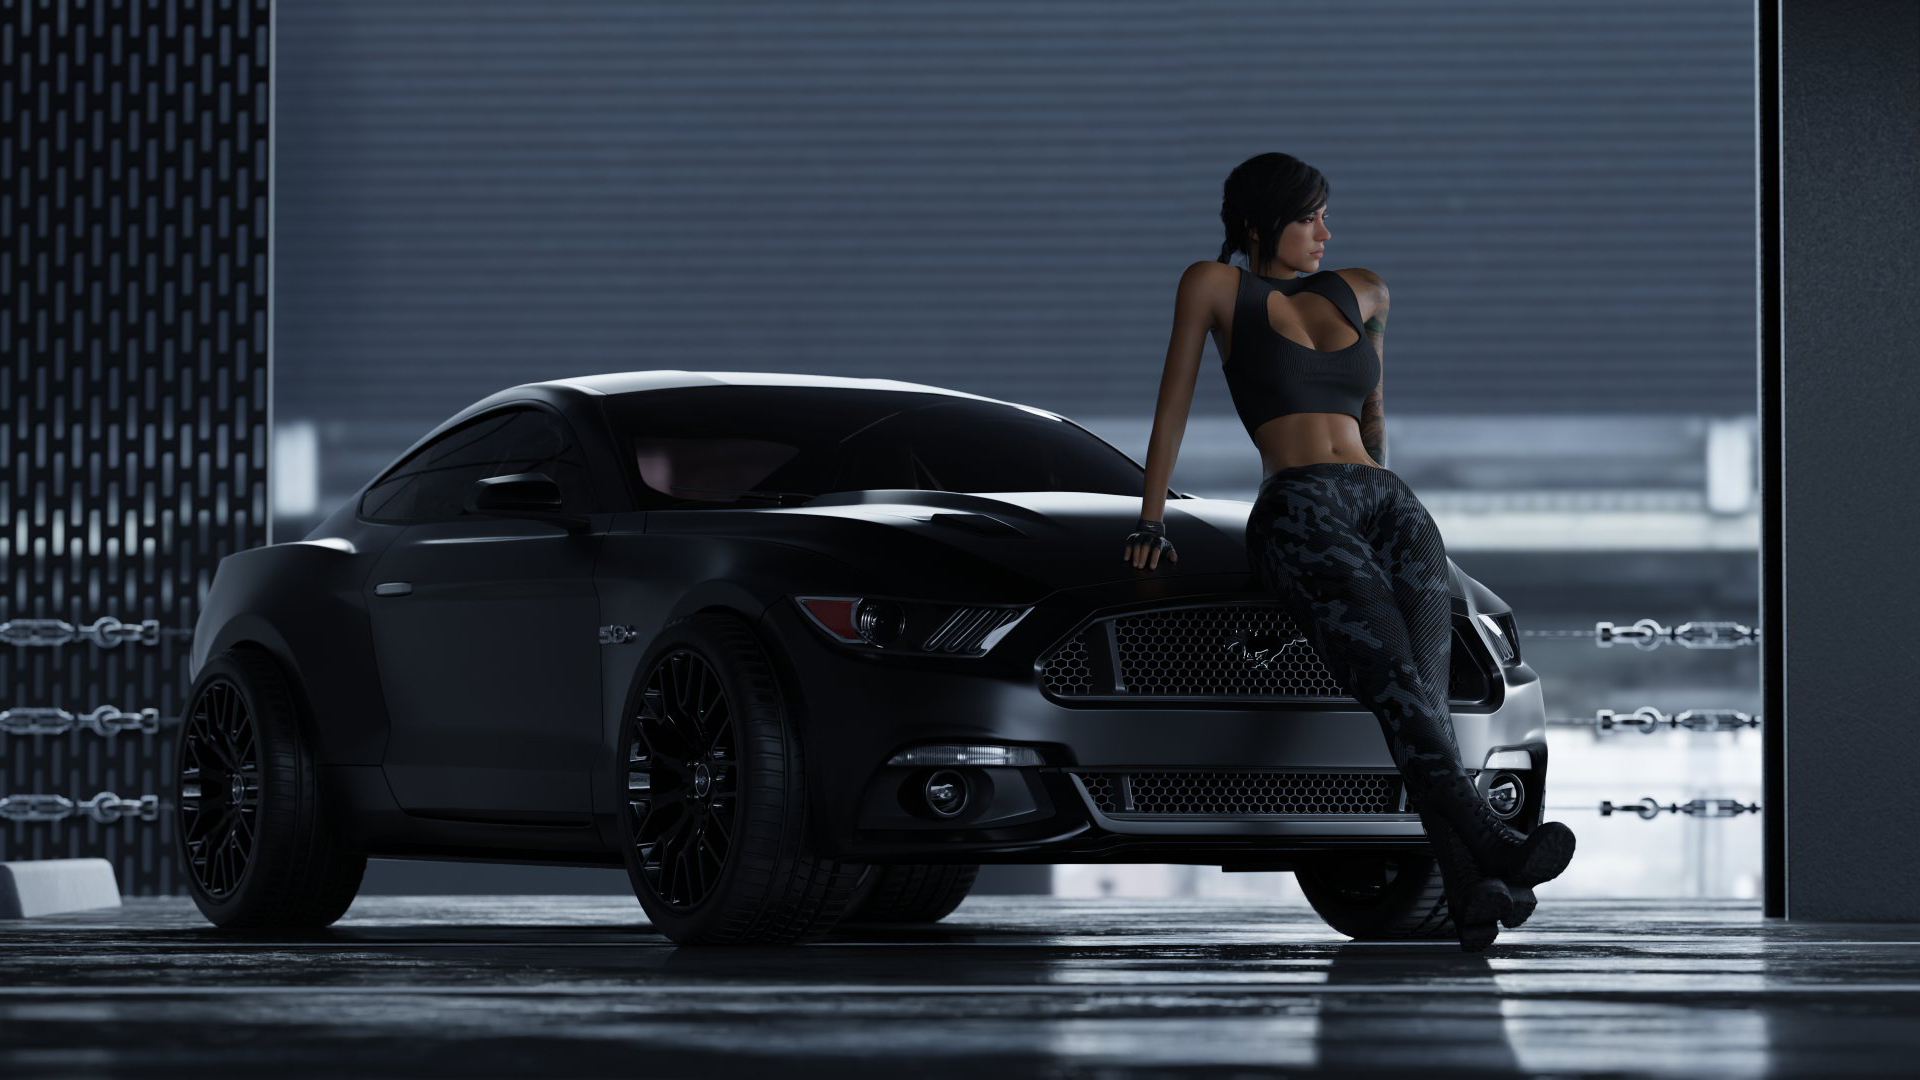 Mara Valkyrie Call Of Duty Mustang Car Garage Brunette Black Cars Tattoo Top Sweatpants Boots Black  1920x1080